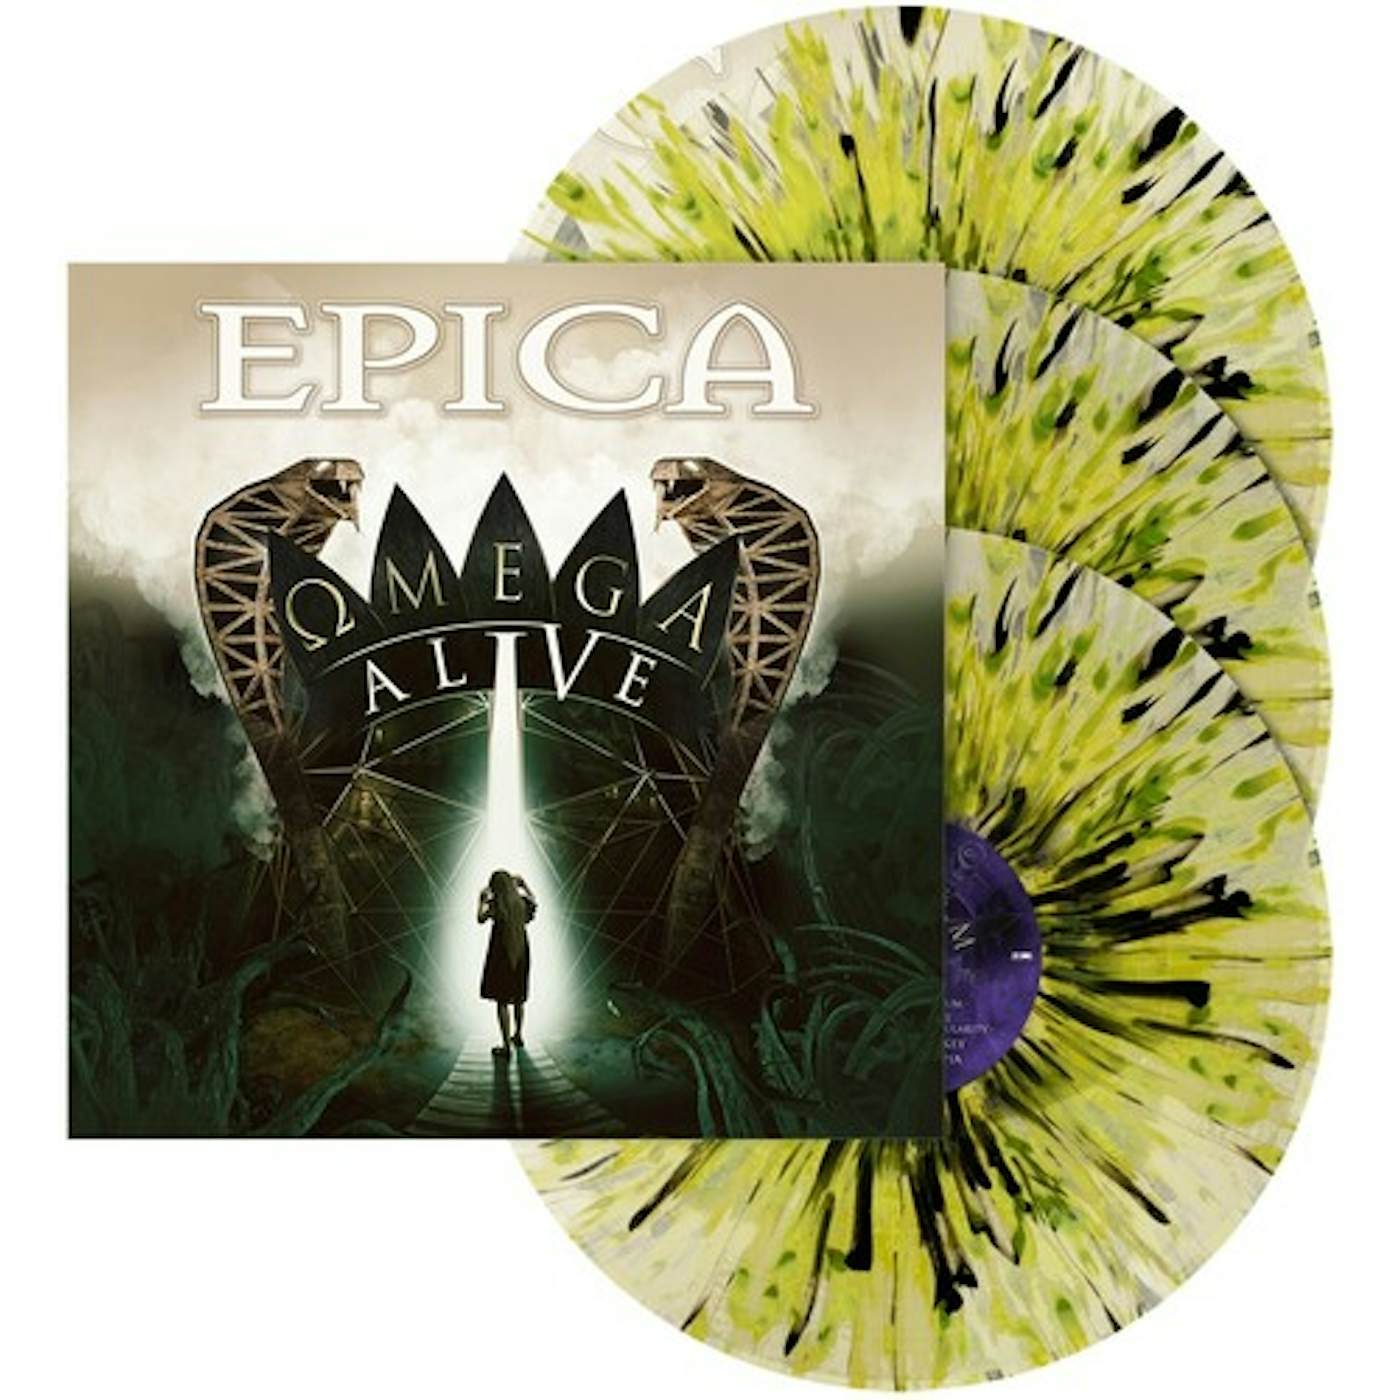 Epica Omega Alive - Splatter Vinyl Record